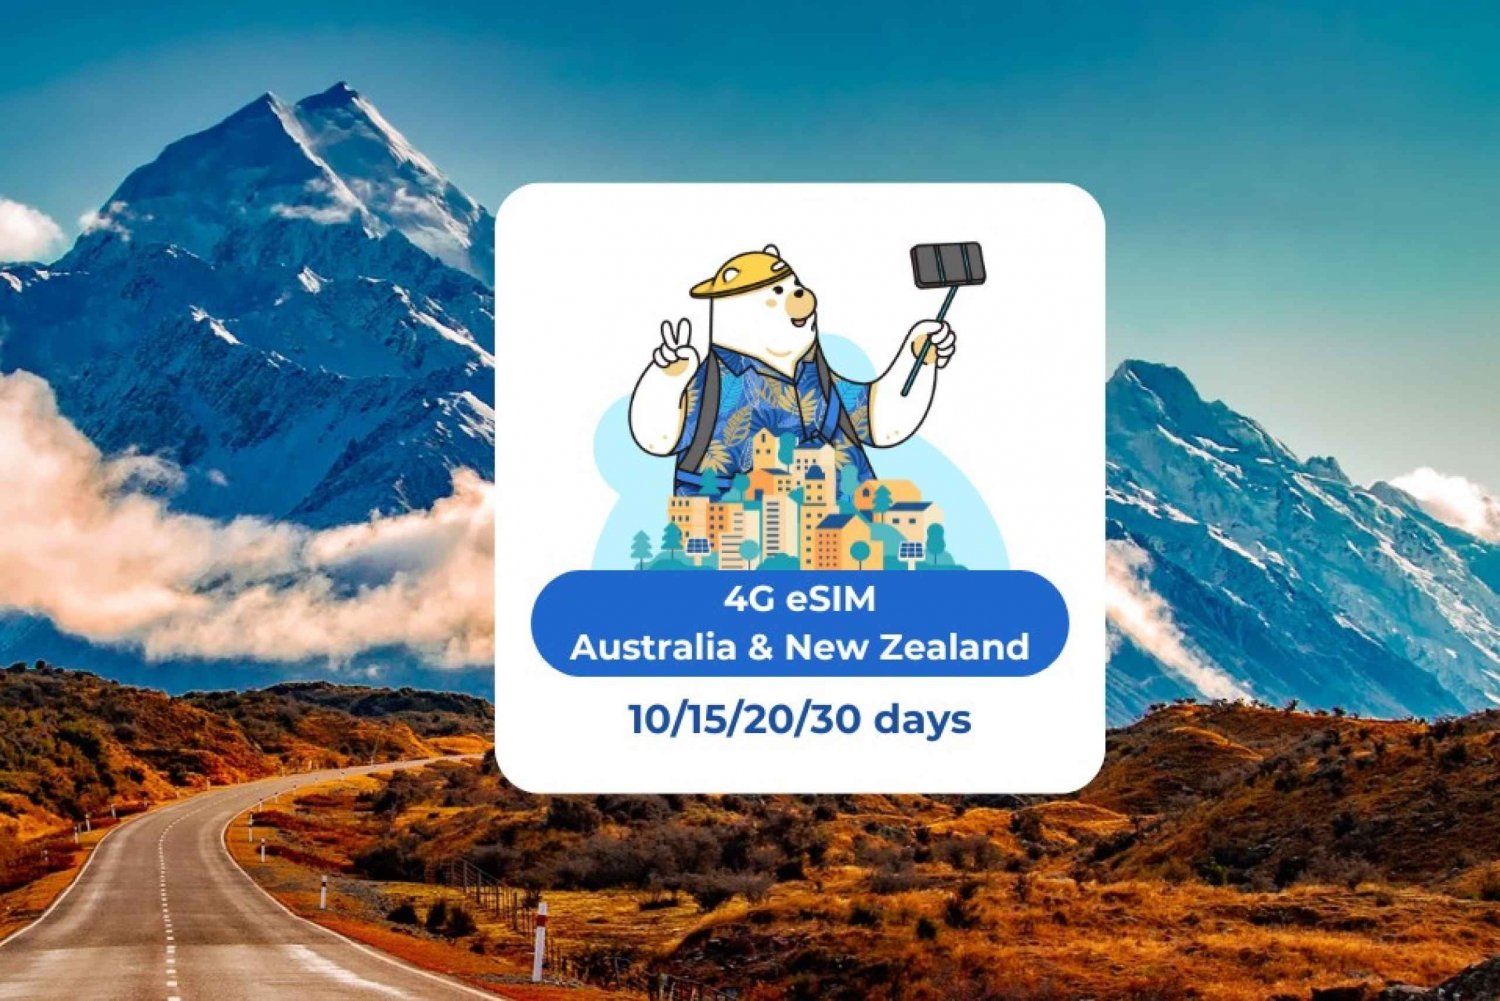 澳大利亚 & Newzealand: eSIM Mobile Data 10/15/20/30 days